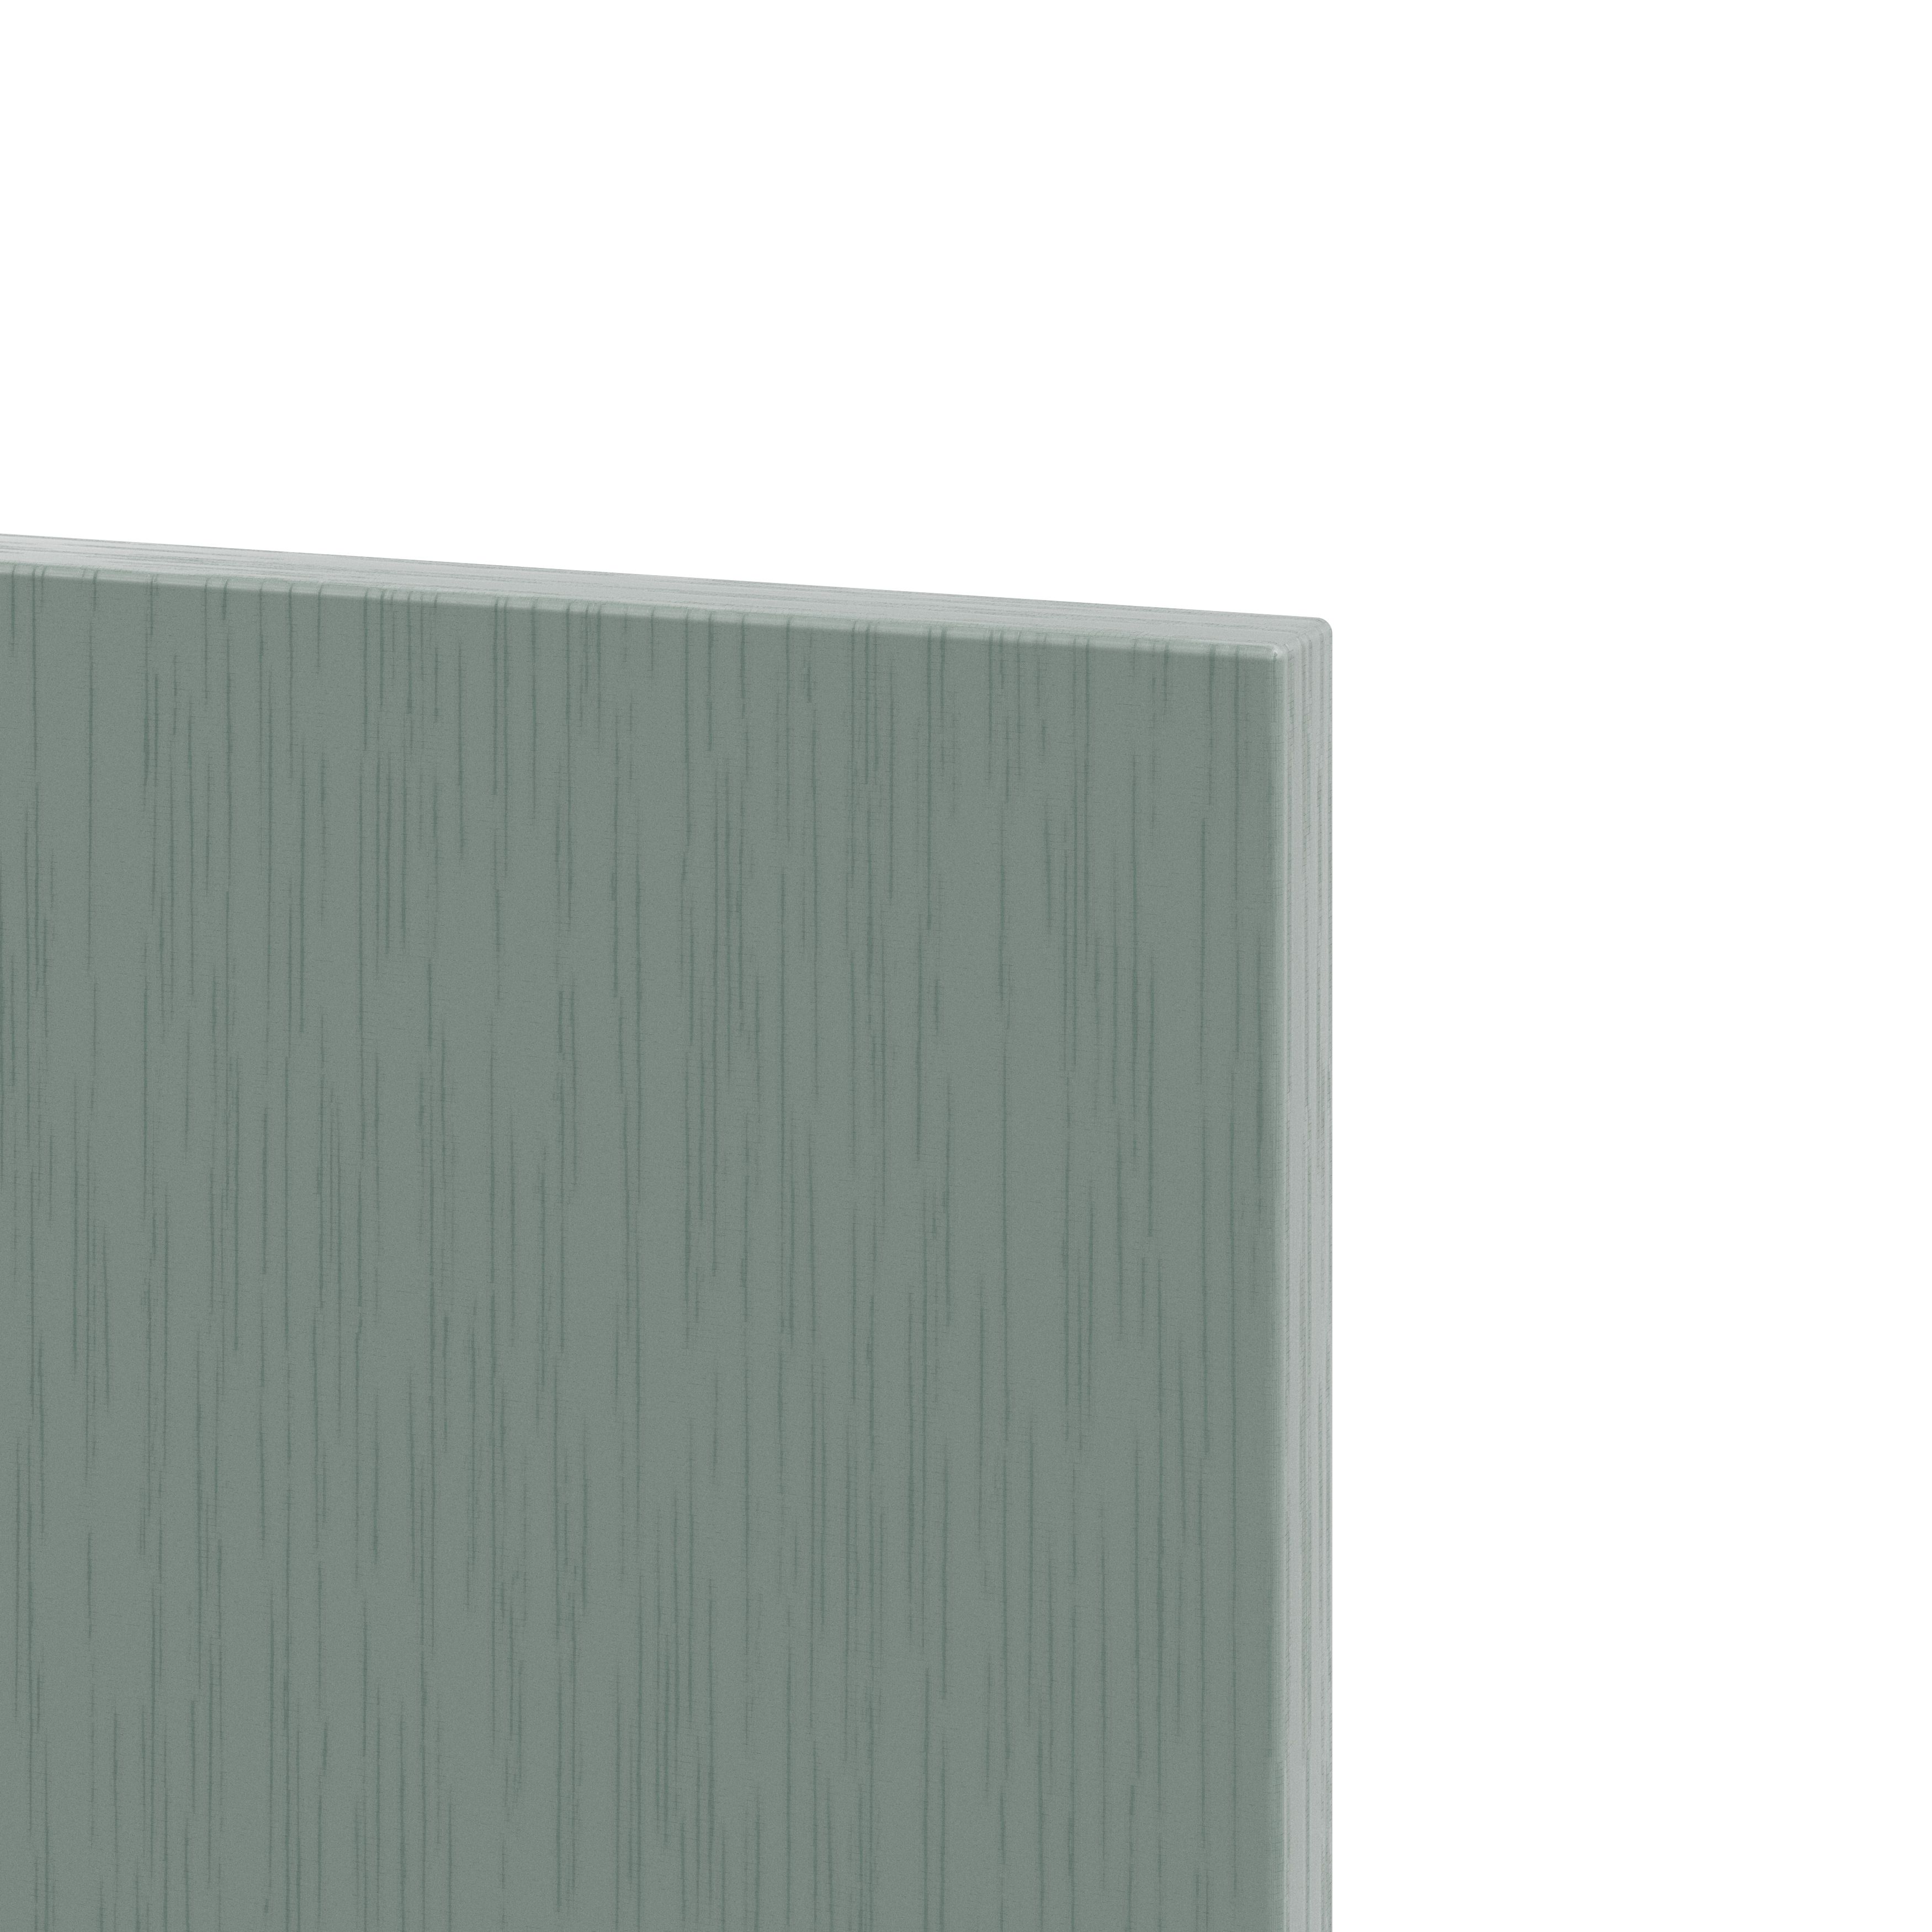 GoodHome Alpinia Matt Green Painted Wood Effect Shaker Tall Appliance & larder End panel (H)2190mm (W)570mm, Pair